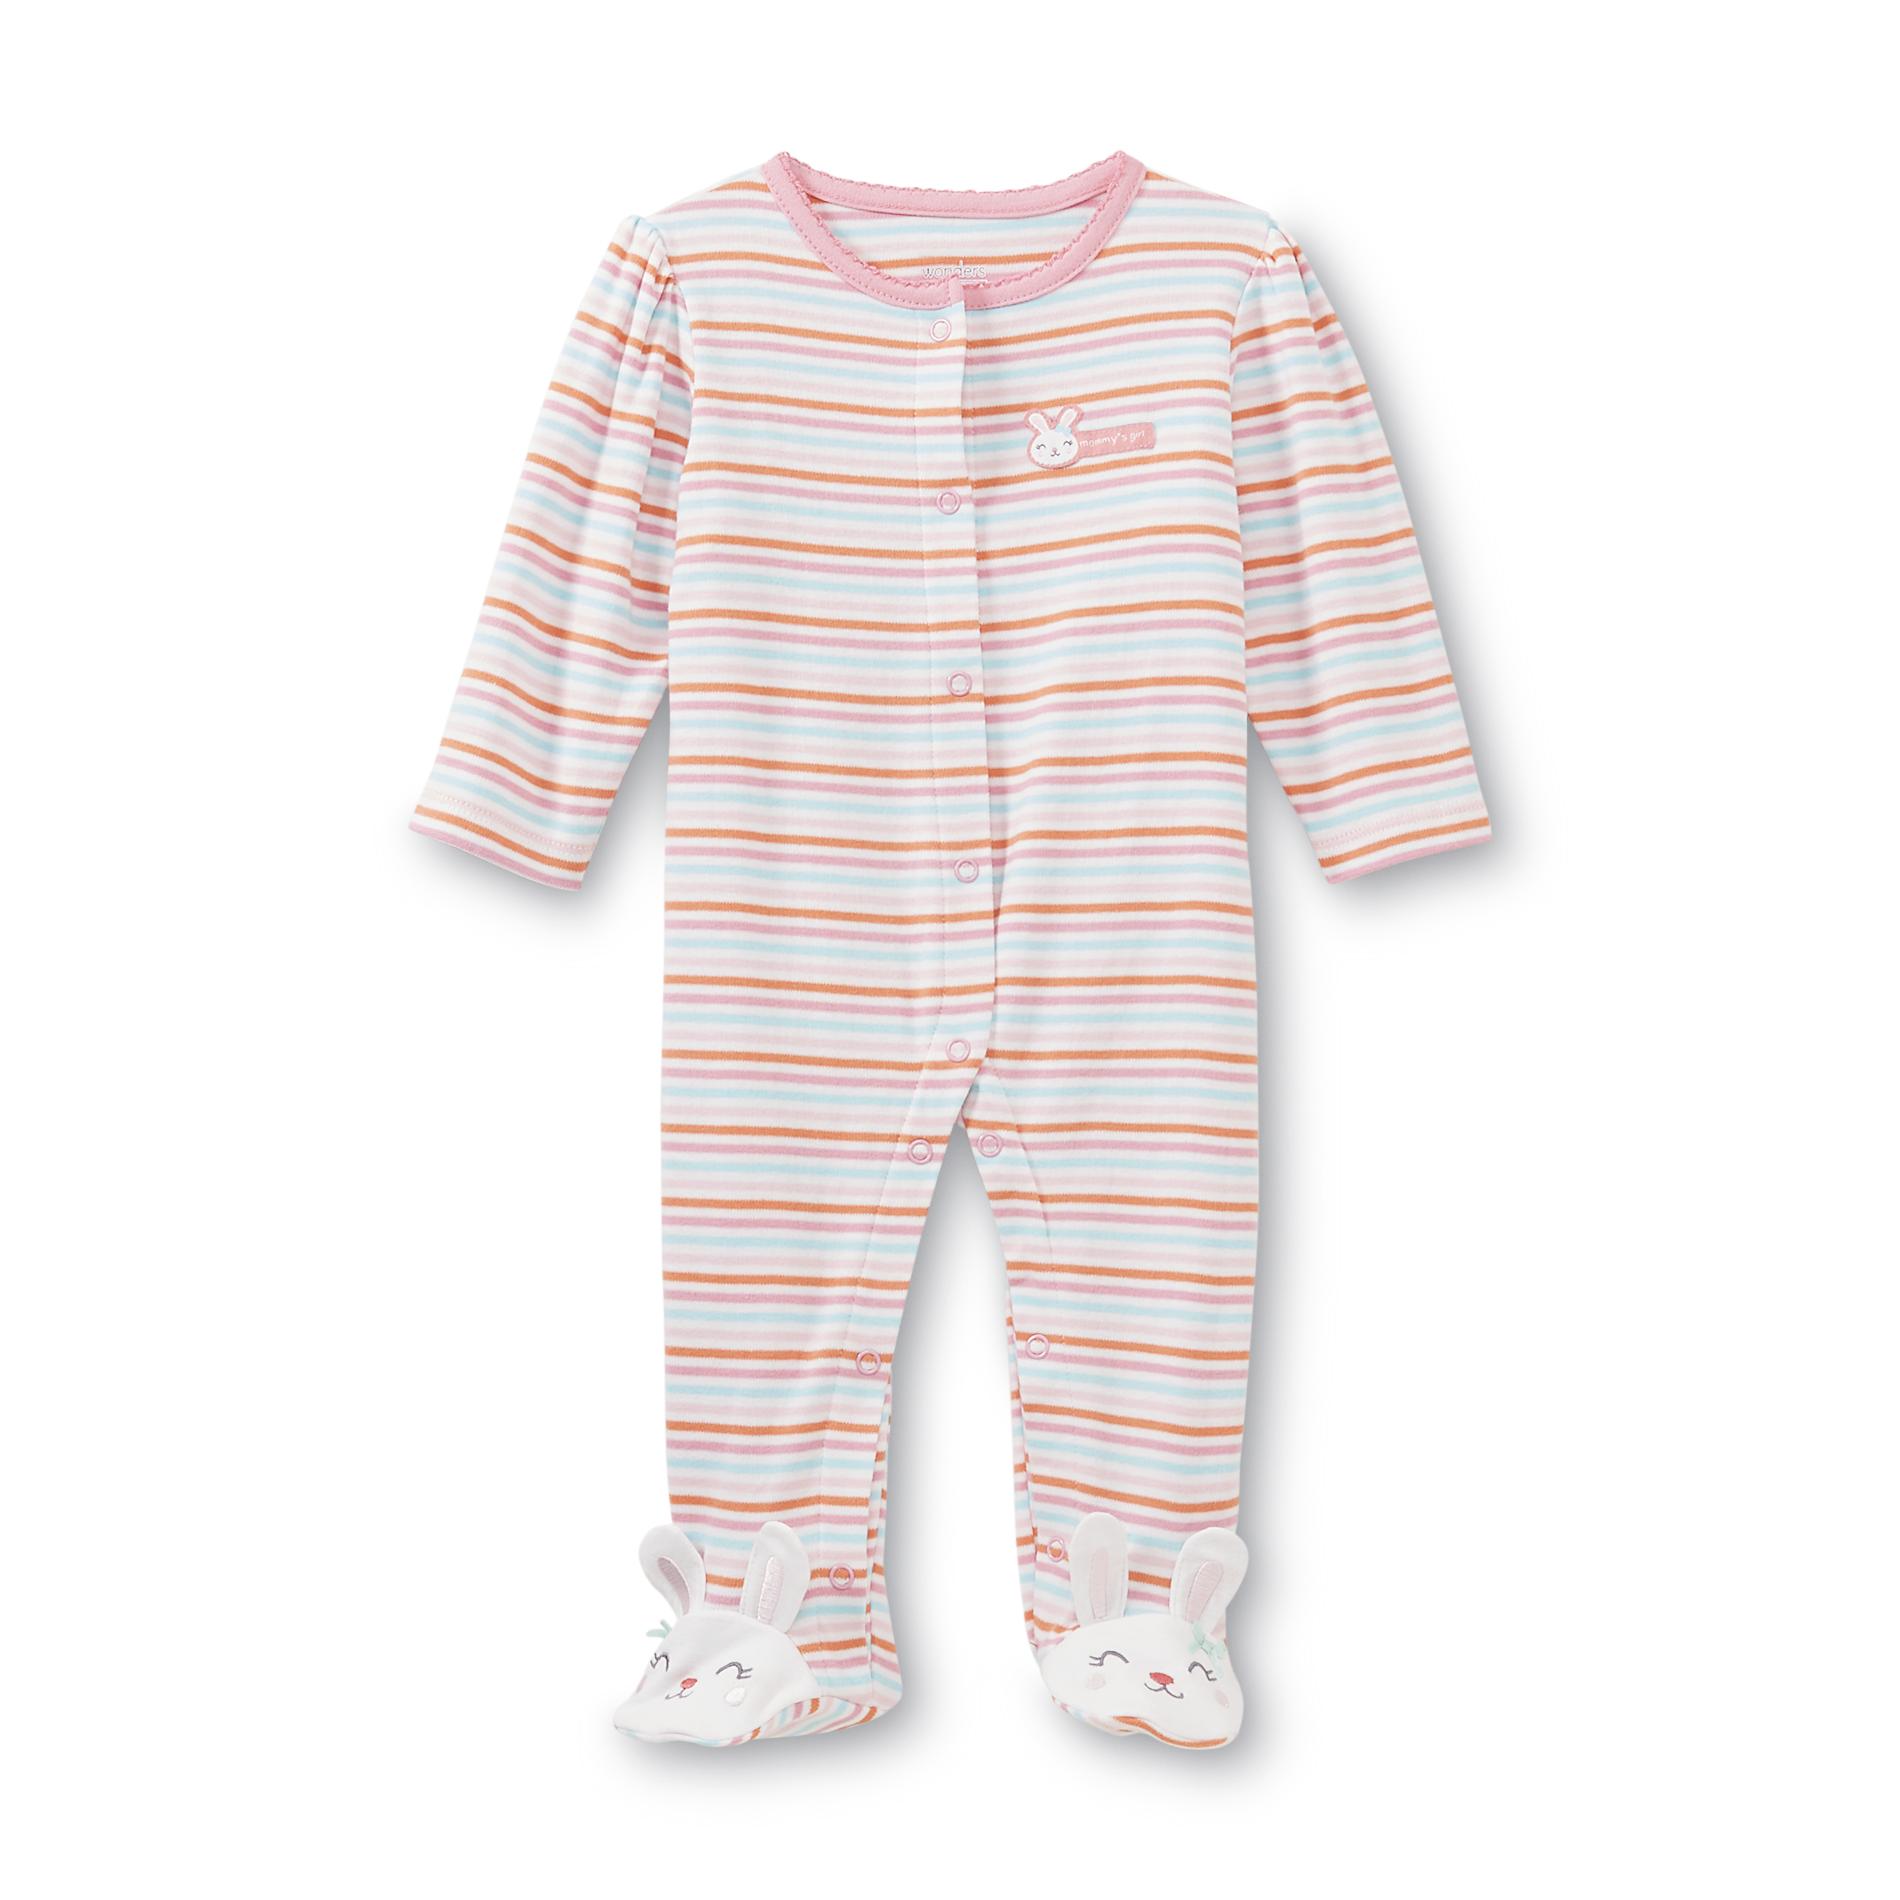 Little Wonders Newborn Girl's Footed Pajamas - Bunny